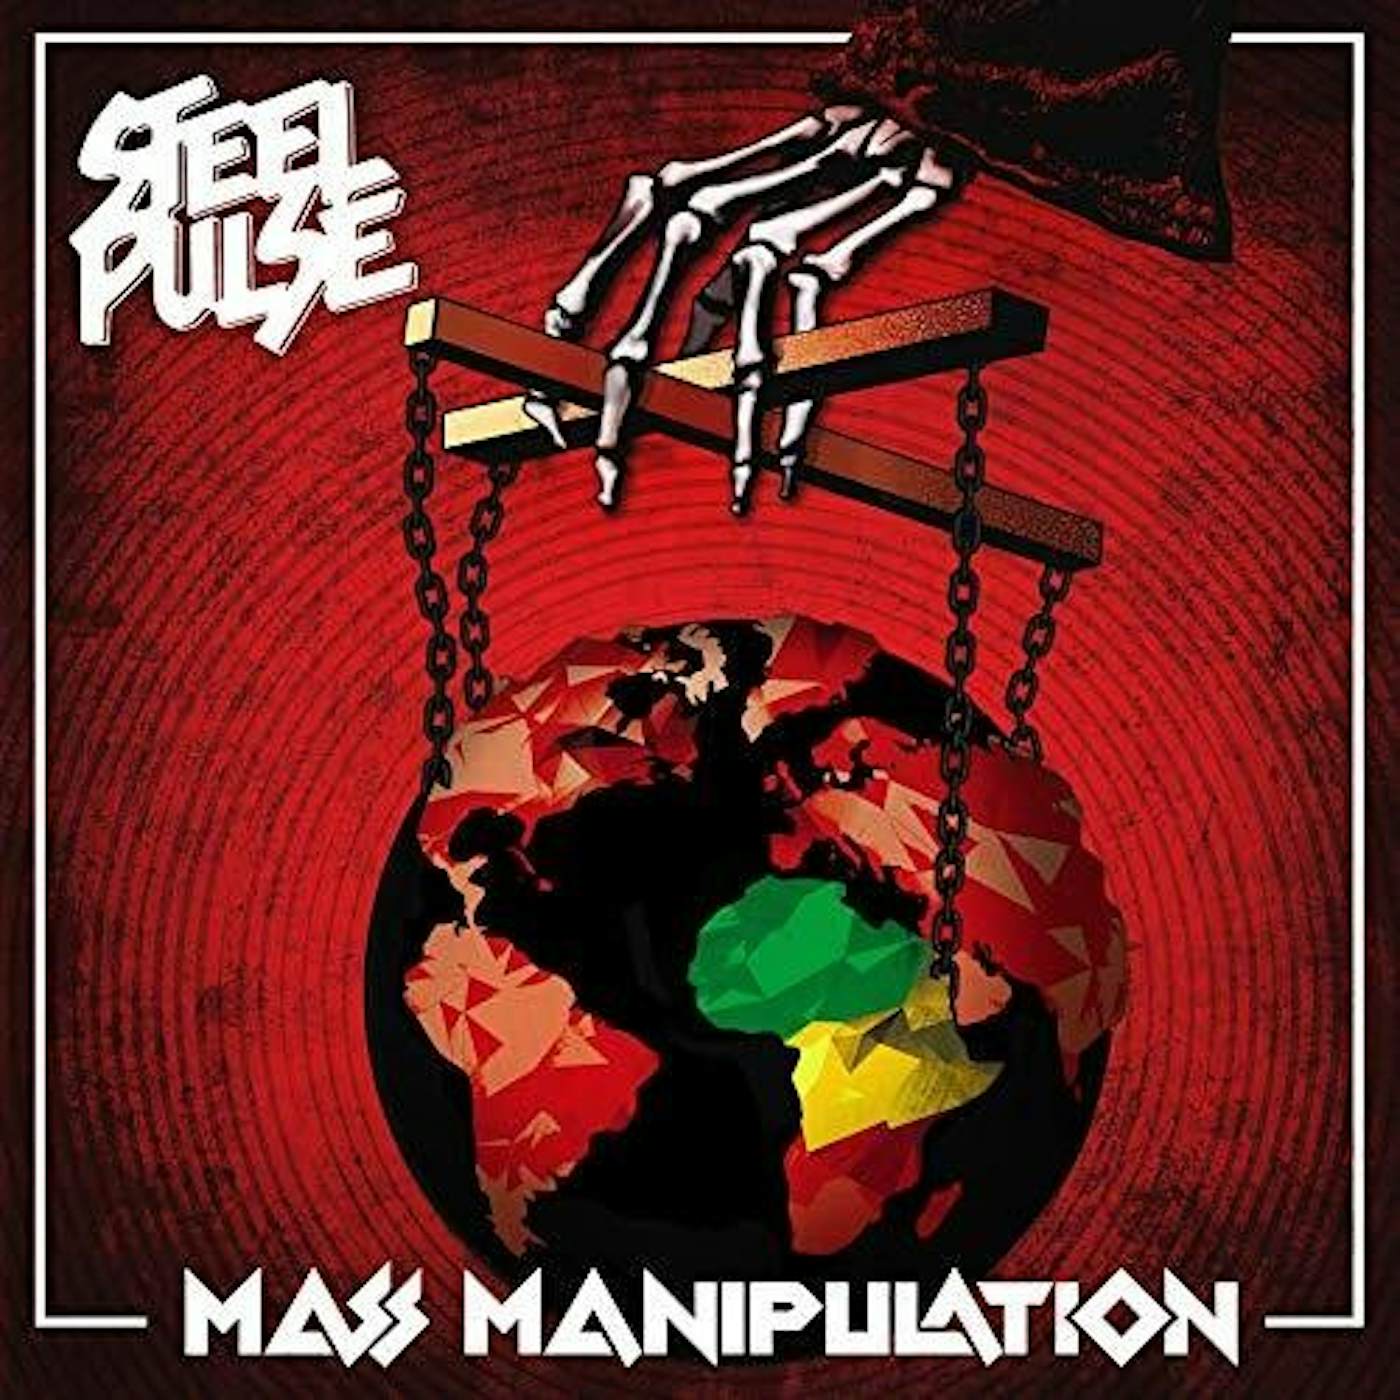 Steel Pulse Mass Manipulation Vinyl Record